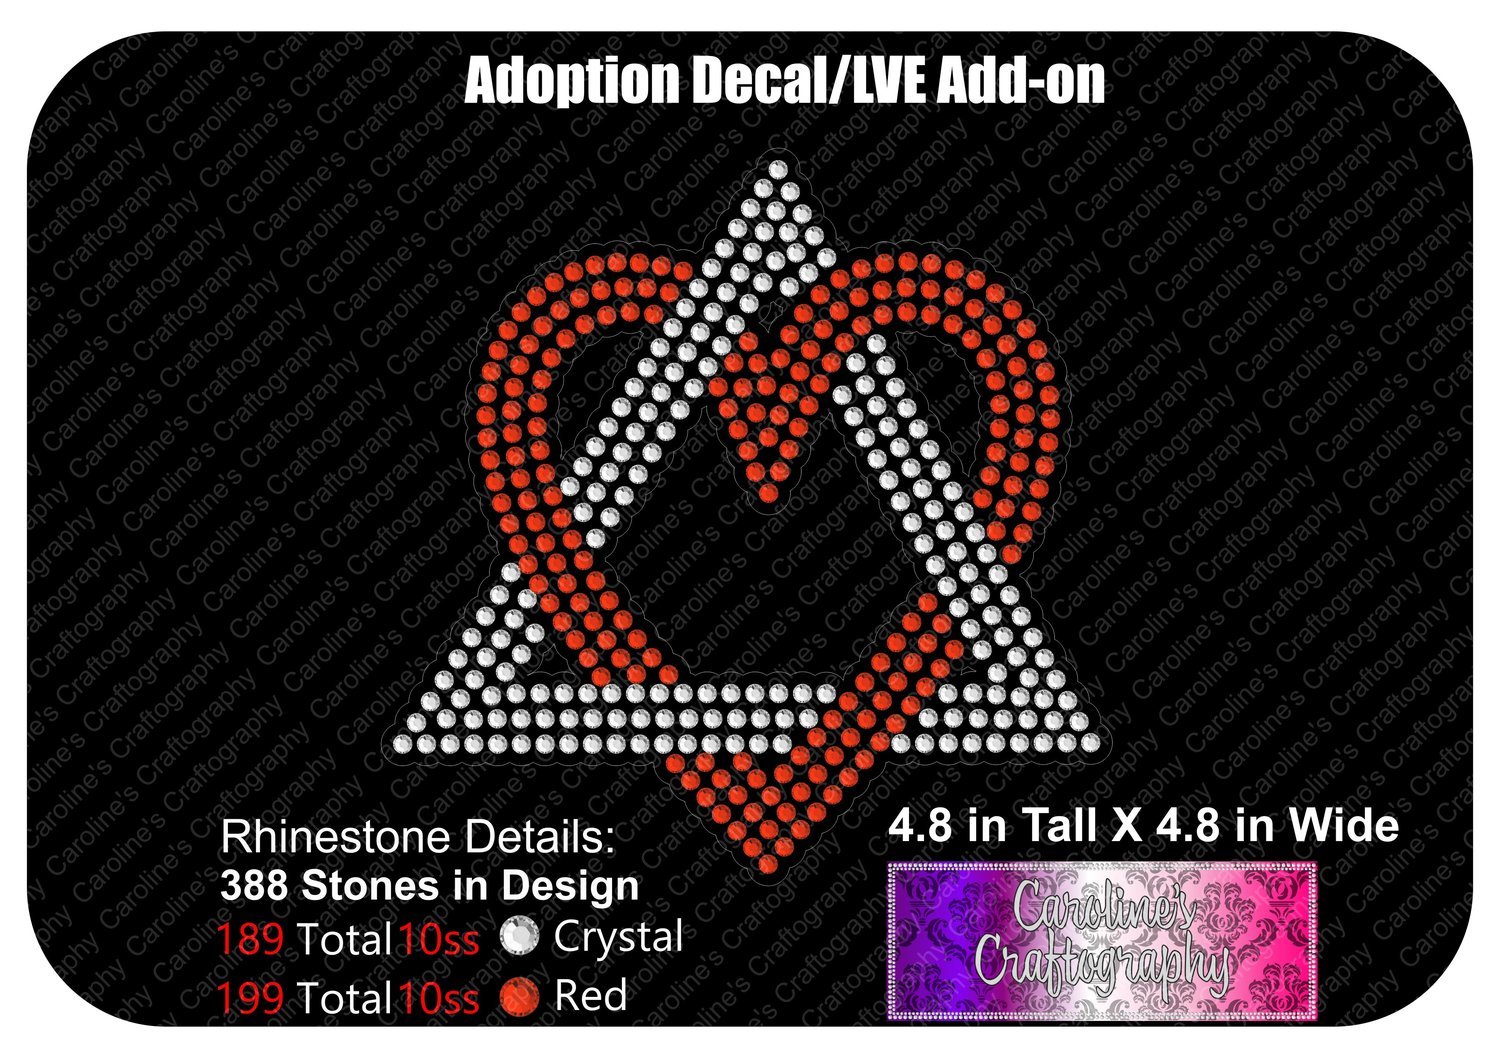 Adoption Symbol Decal LVE Add-on